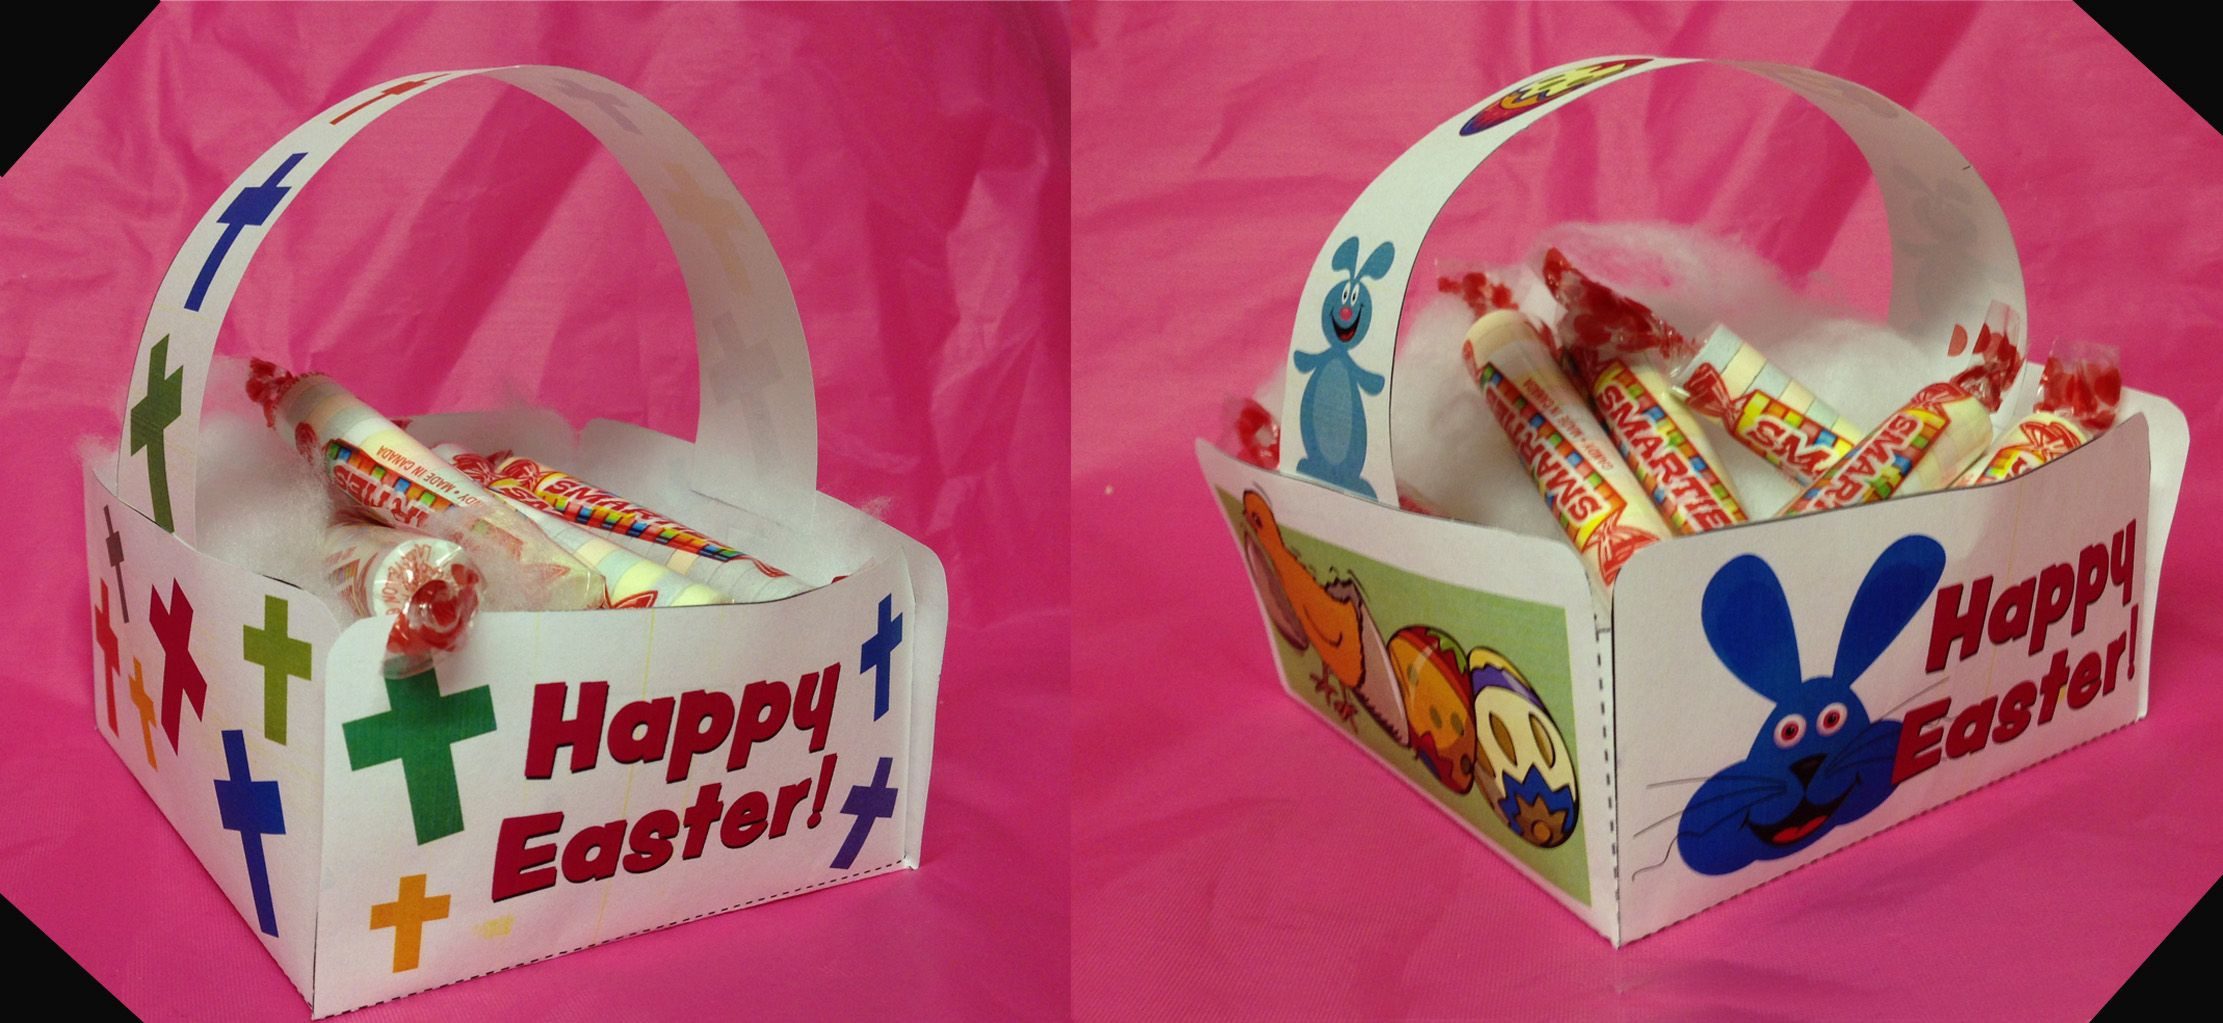 Preschool Easter Basket Ideas
 Free Printable Easter Baskets from Guildcraft Arts